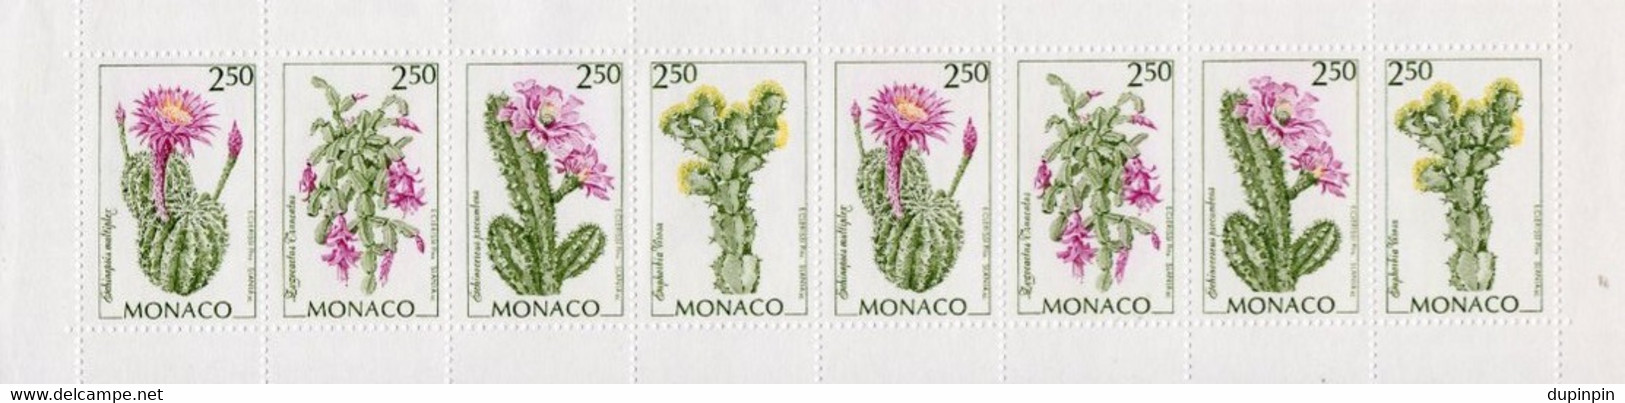 Monaco - Carnet YT N°9 - Flore Du Jardin Exotique - 1993 - Neuf - Libretti